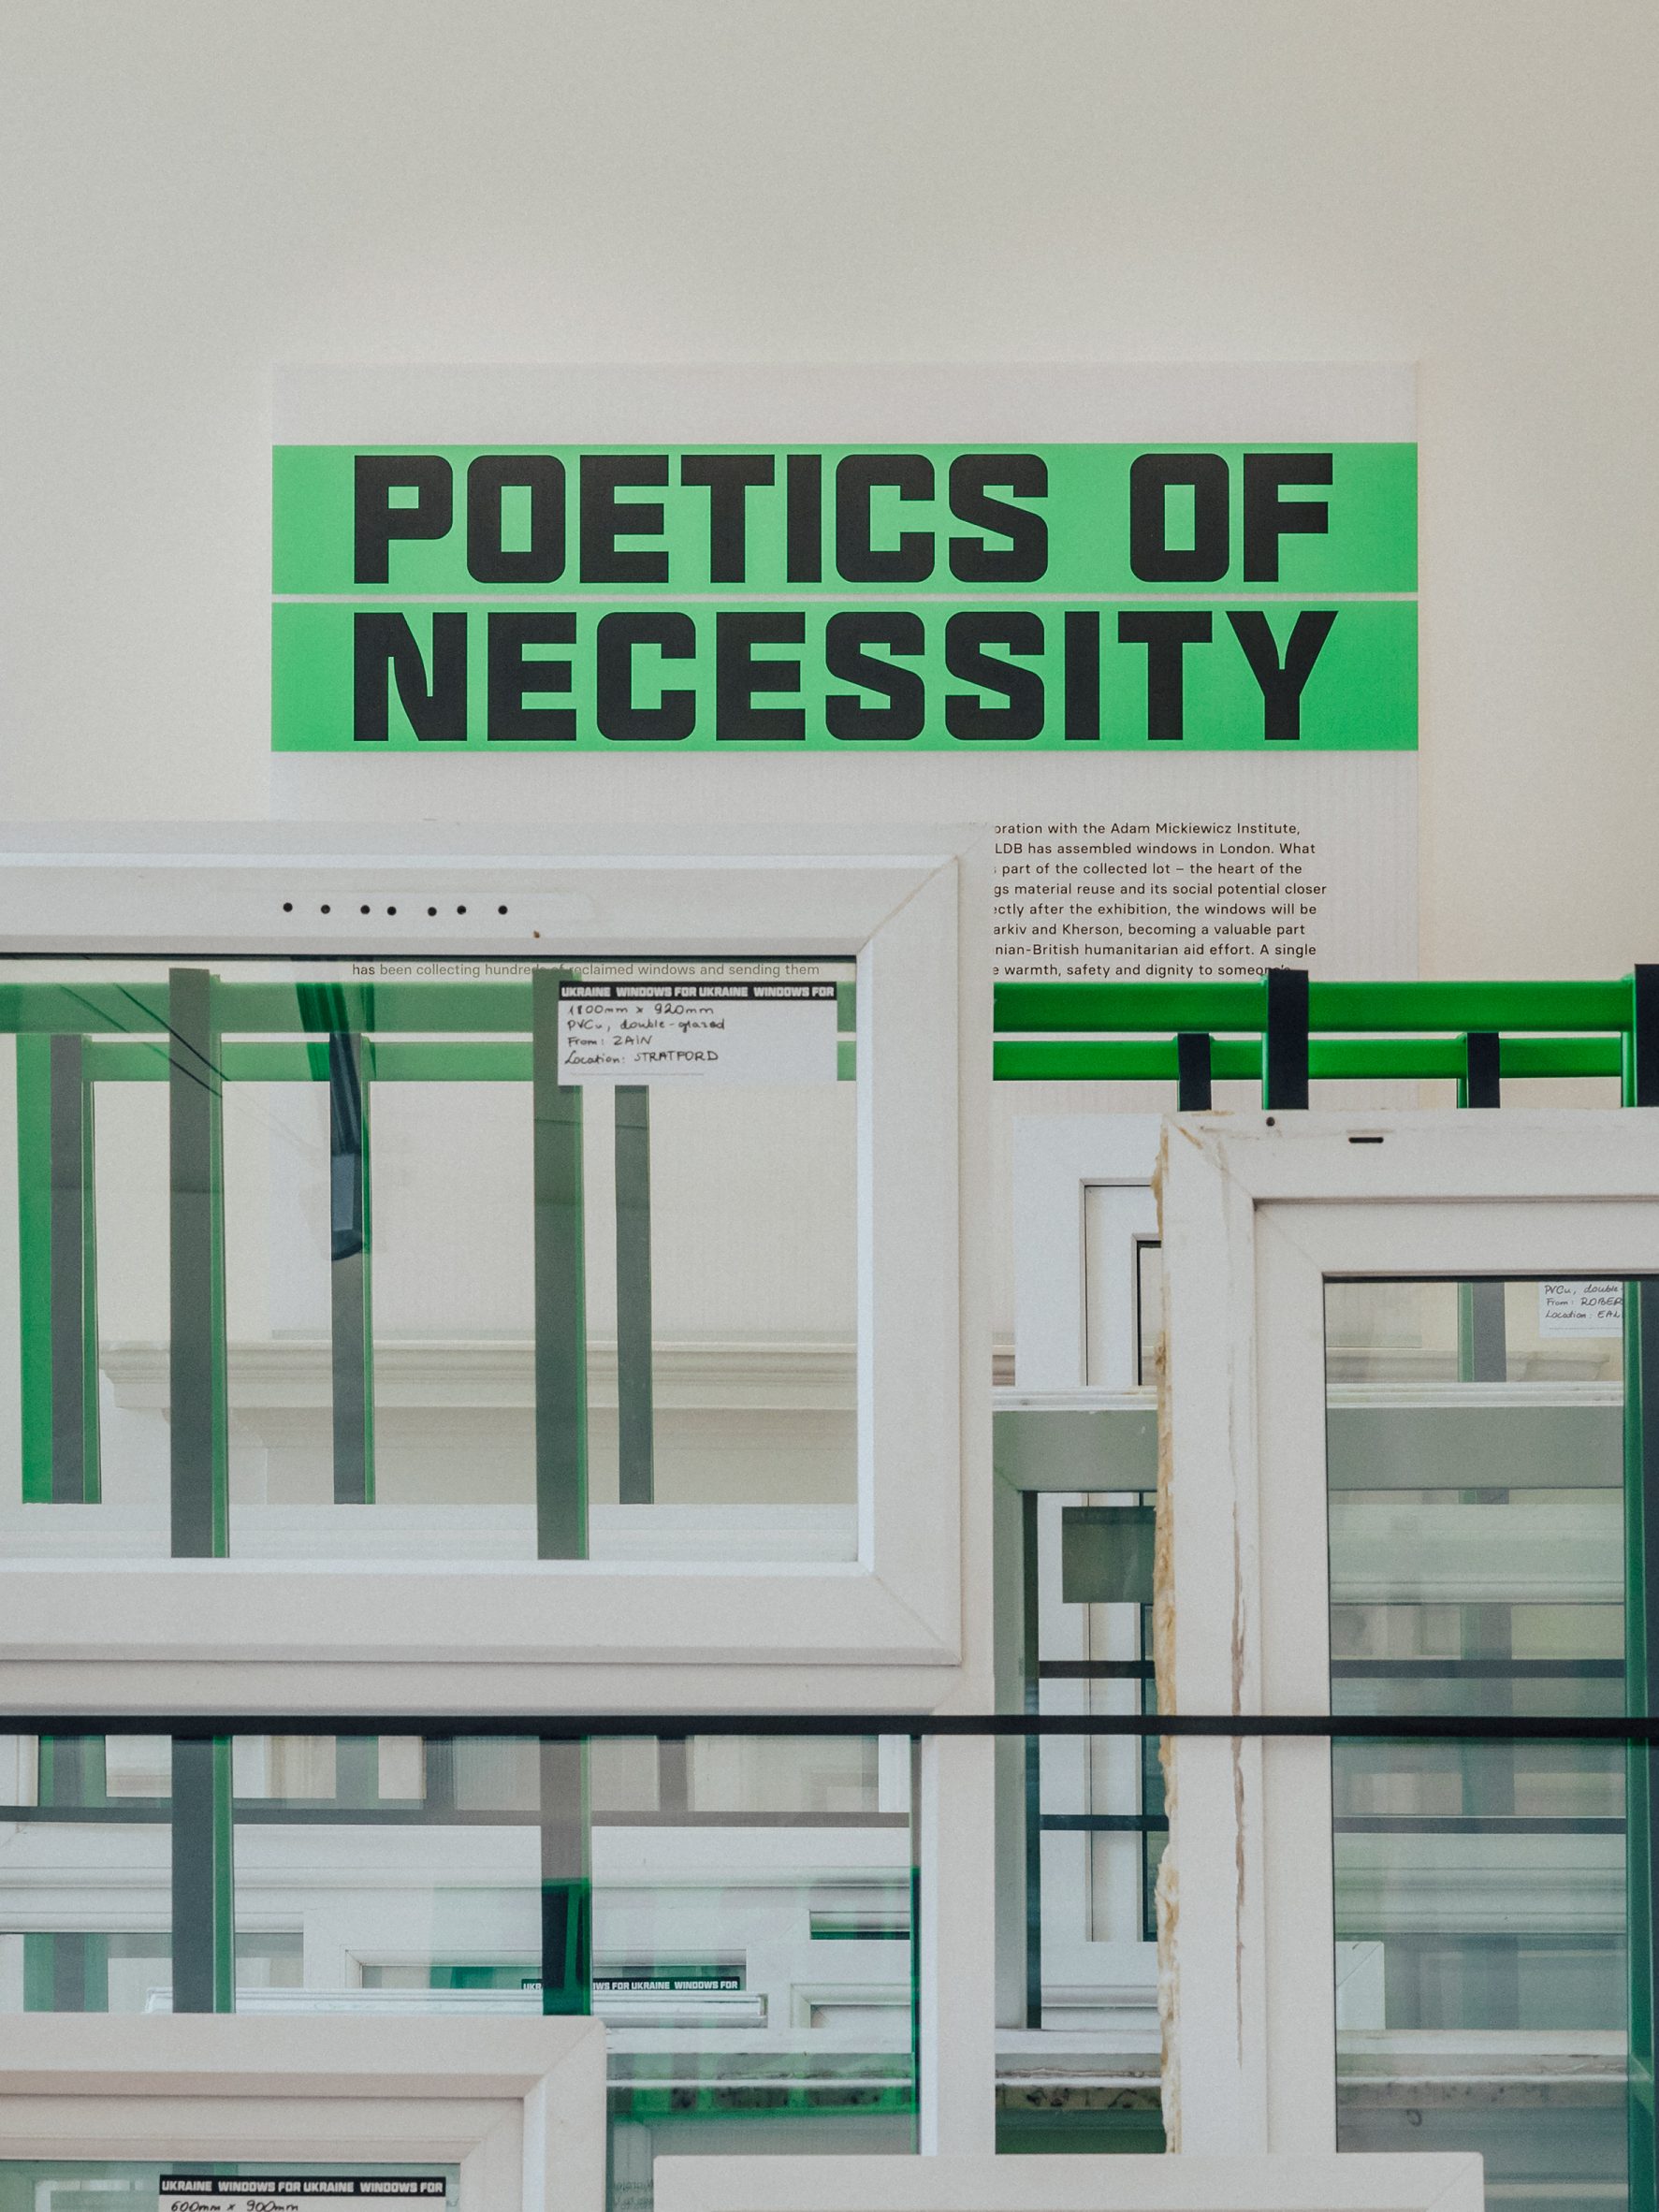 Windows in Poetics of Necessity installation